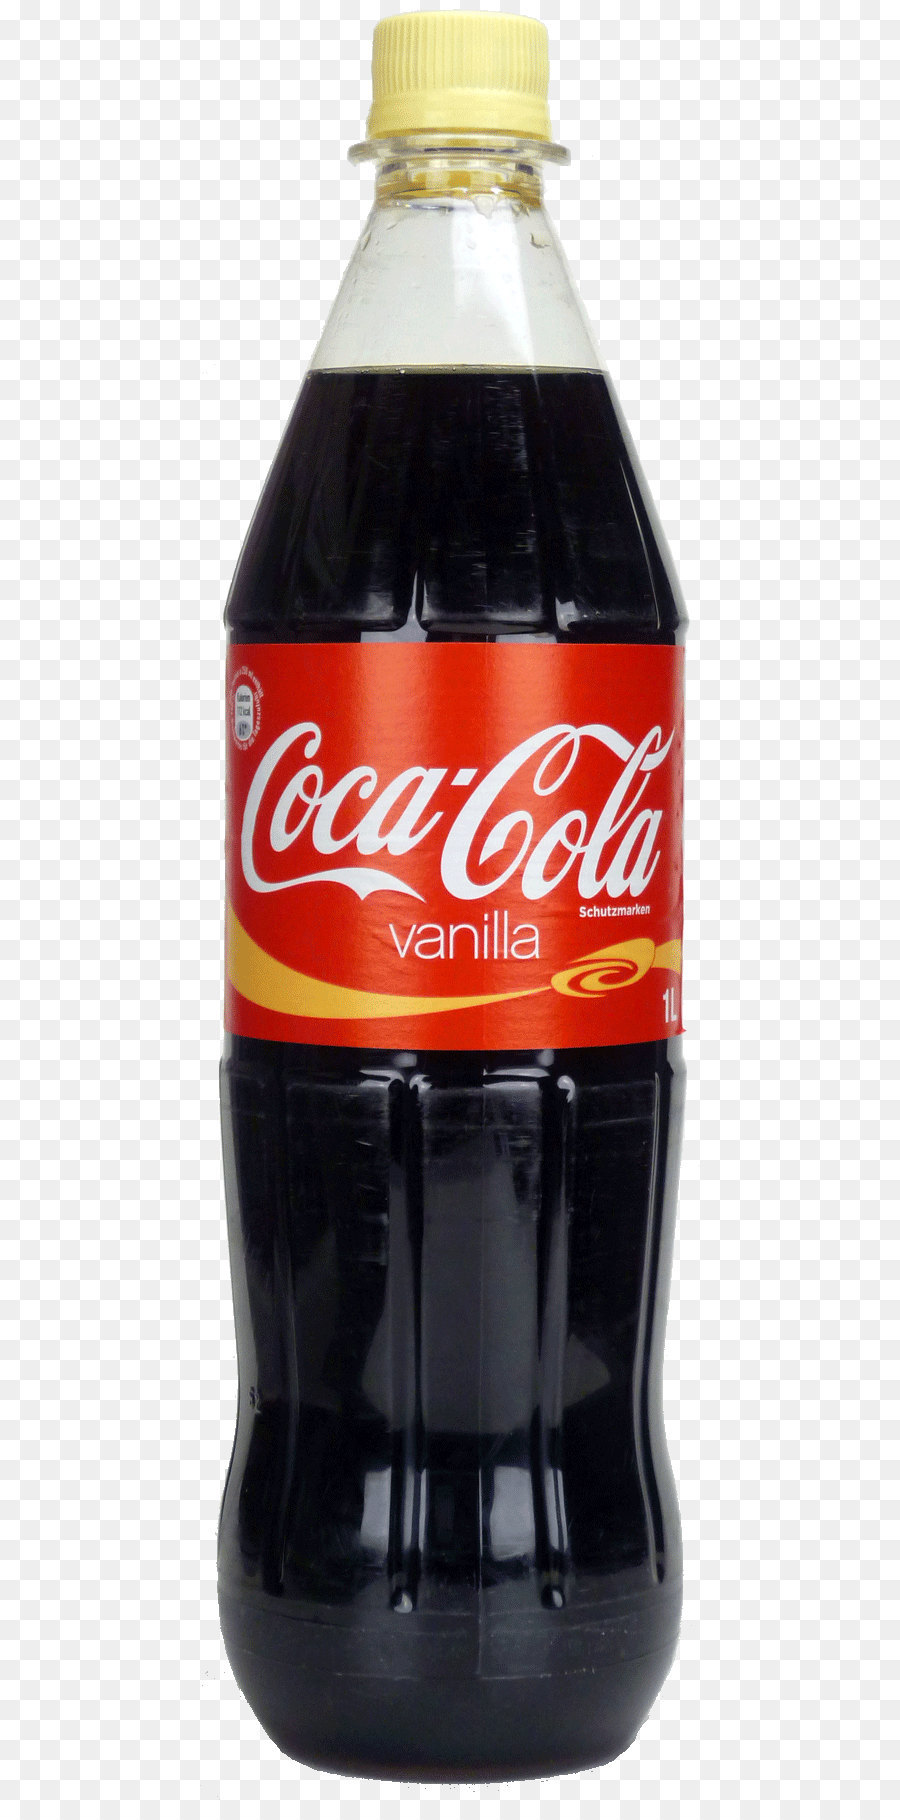 Coca-Cola Cherry Soft drink Diet Coke - Coca cola bottle PNG image png download - 500*1802 - Free Transparent Coca Cola png Download.